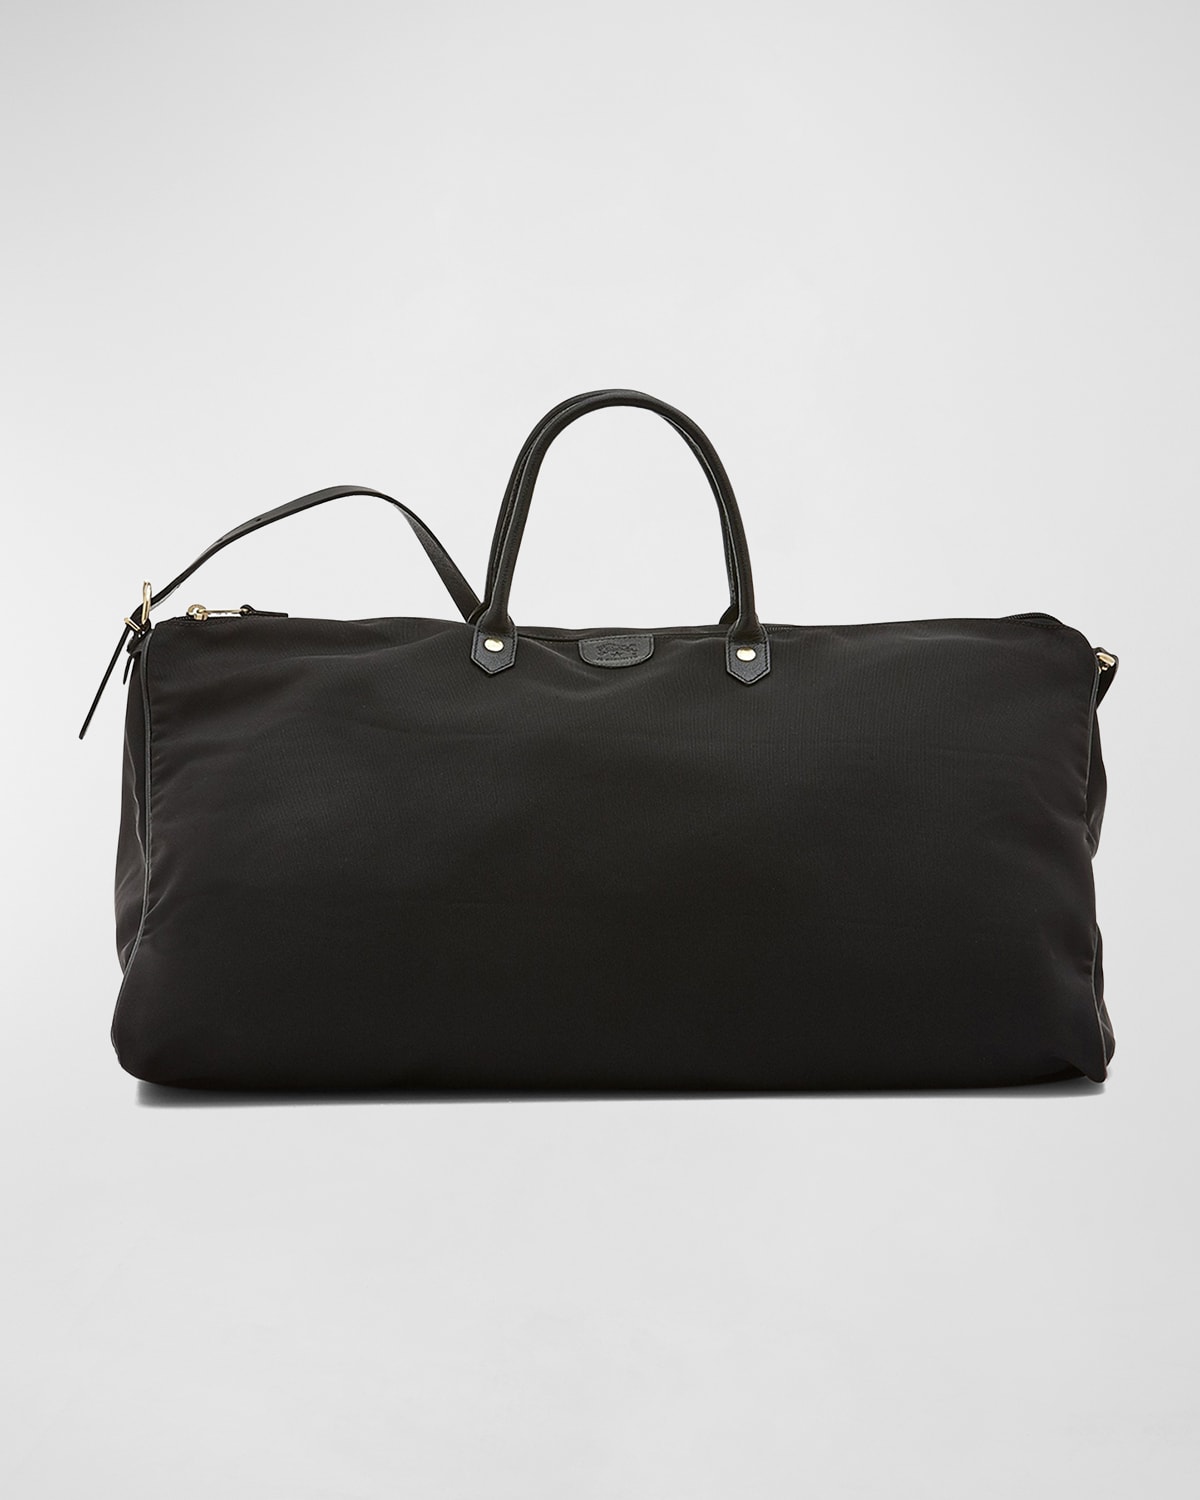 Men's Canvas-Leather Travel Duffle Bag